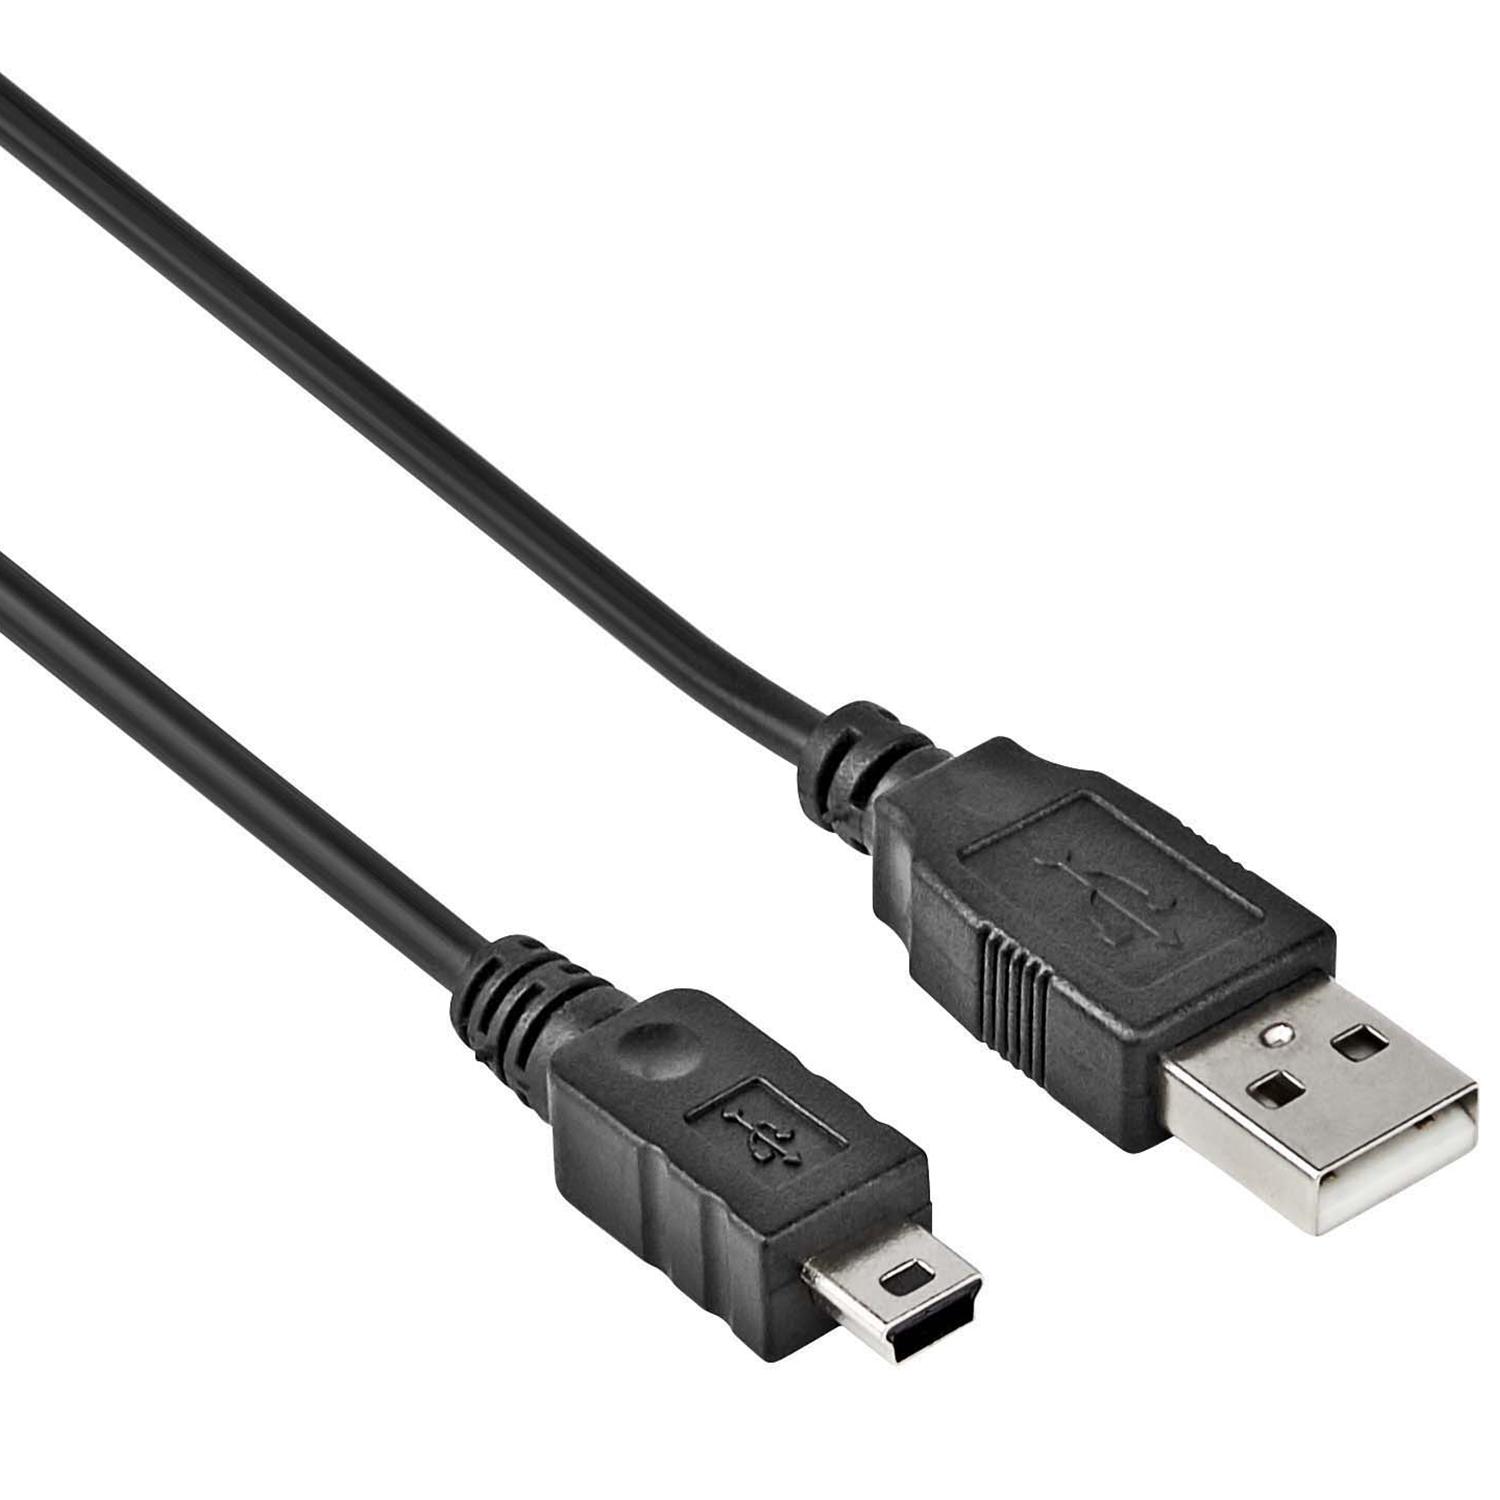 Mini USB kabel - Allteq